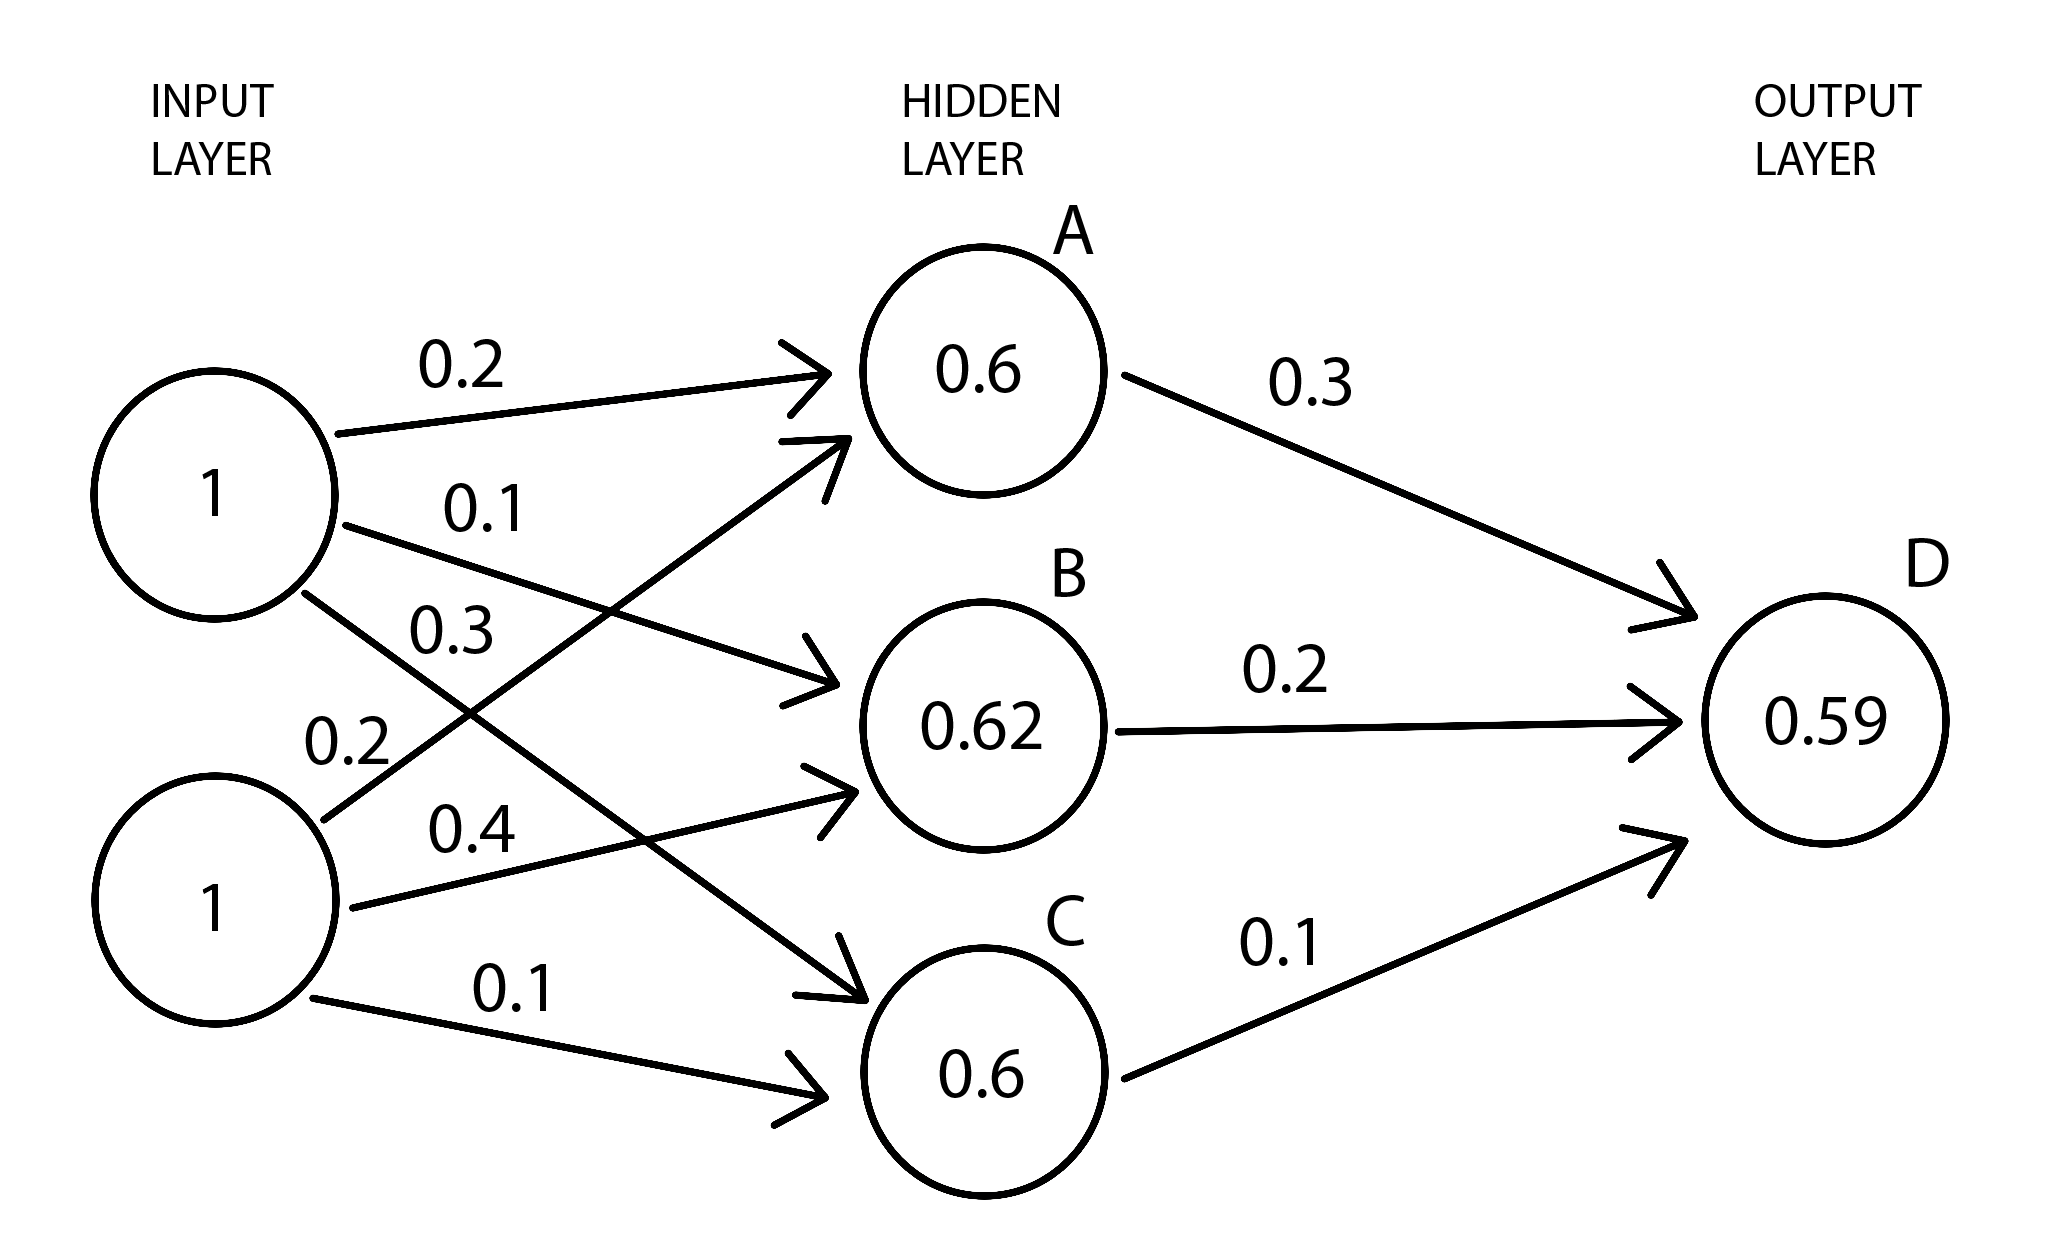 A neural network propagation